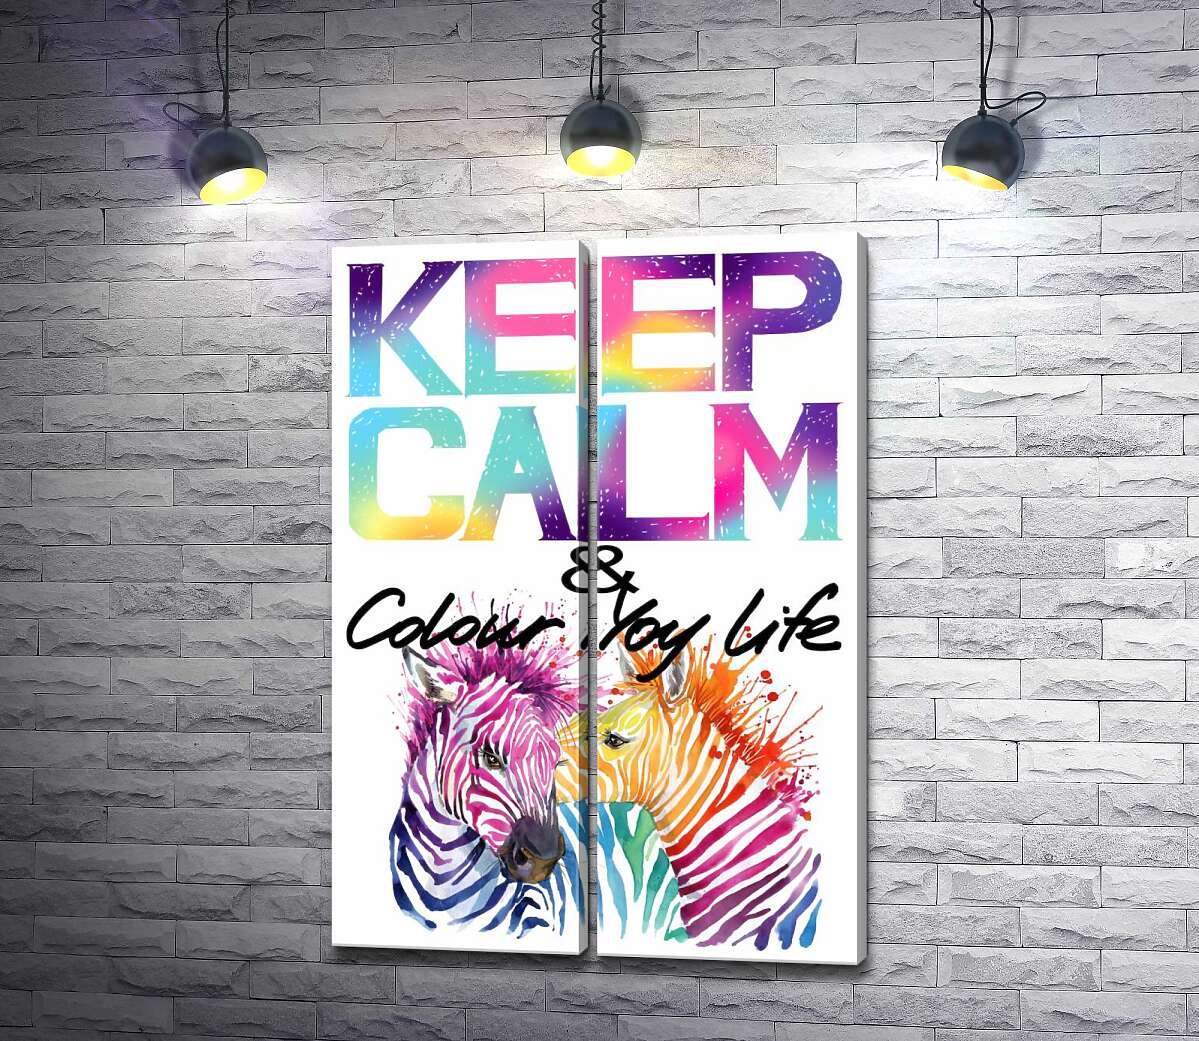 модульна картина Яскраві зебри під написом "keep calm and colour your life"